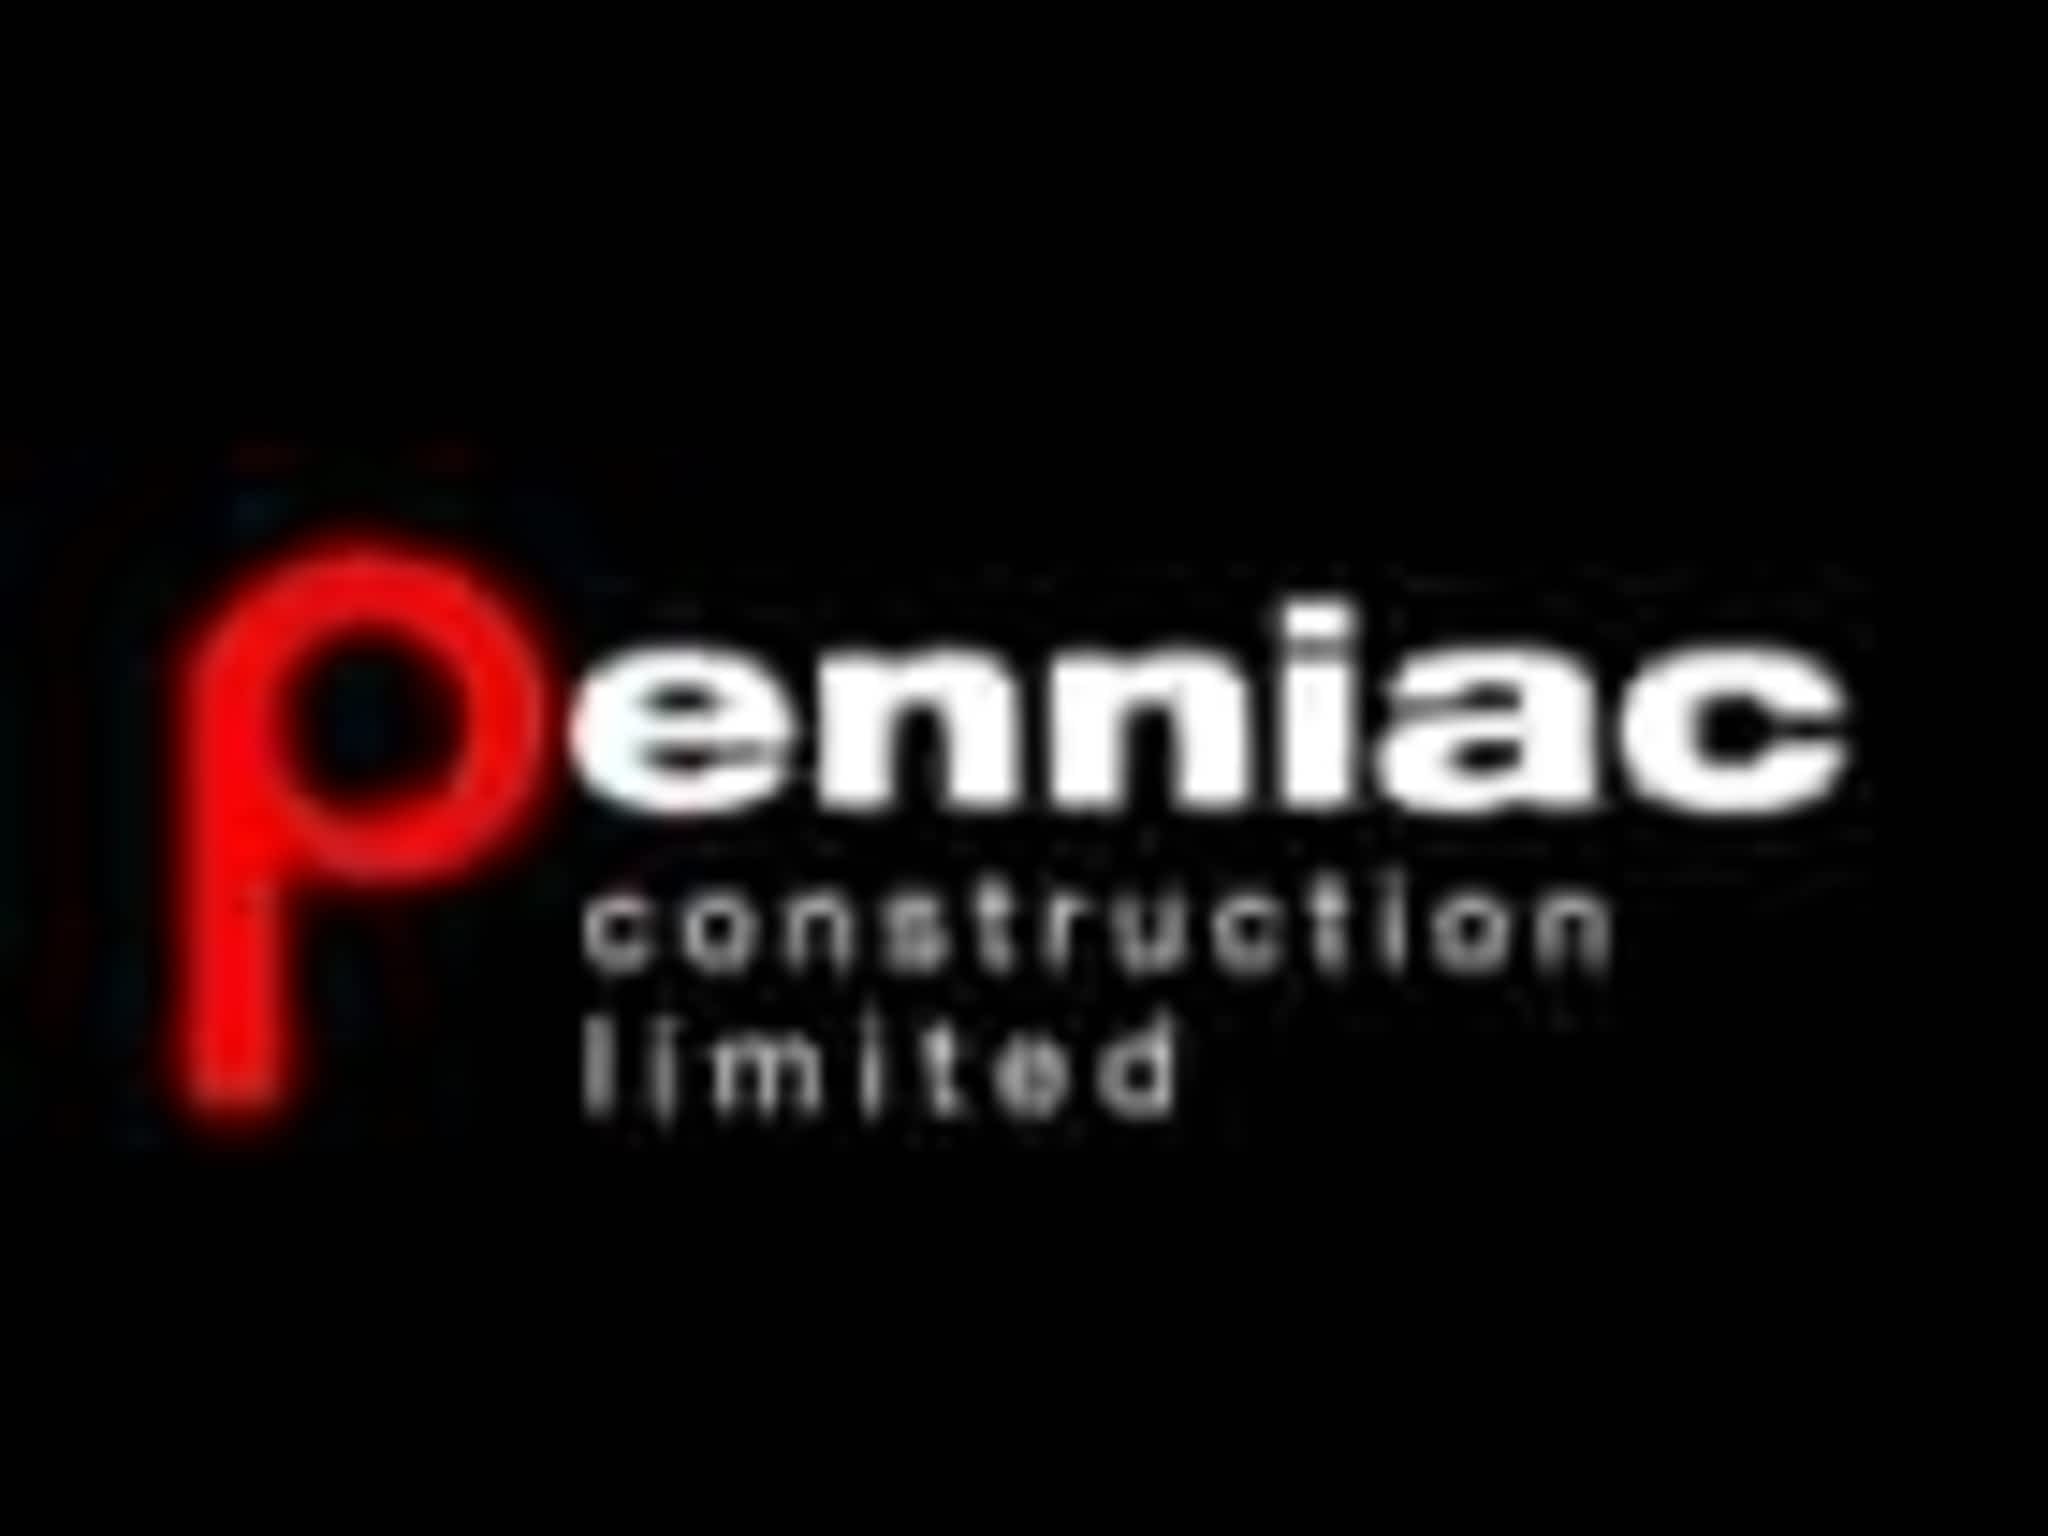 photo Penniac Construction Limited